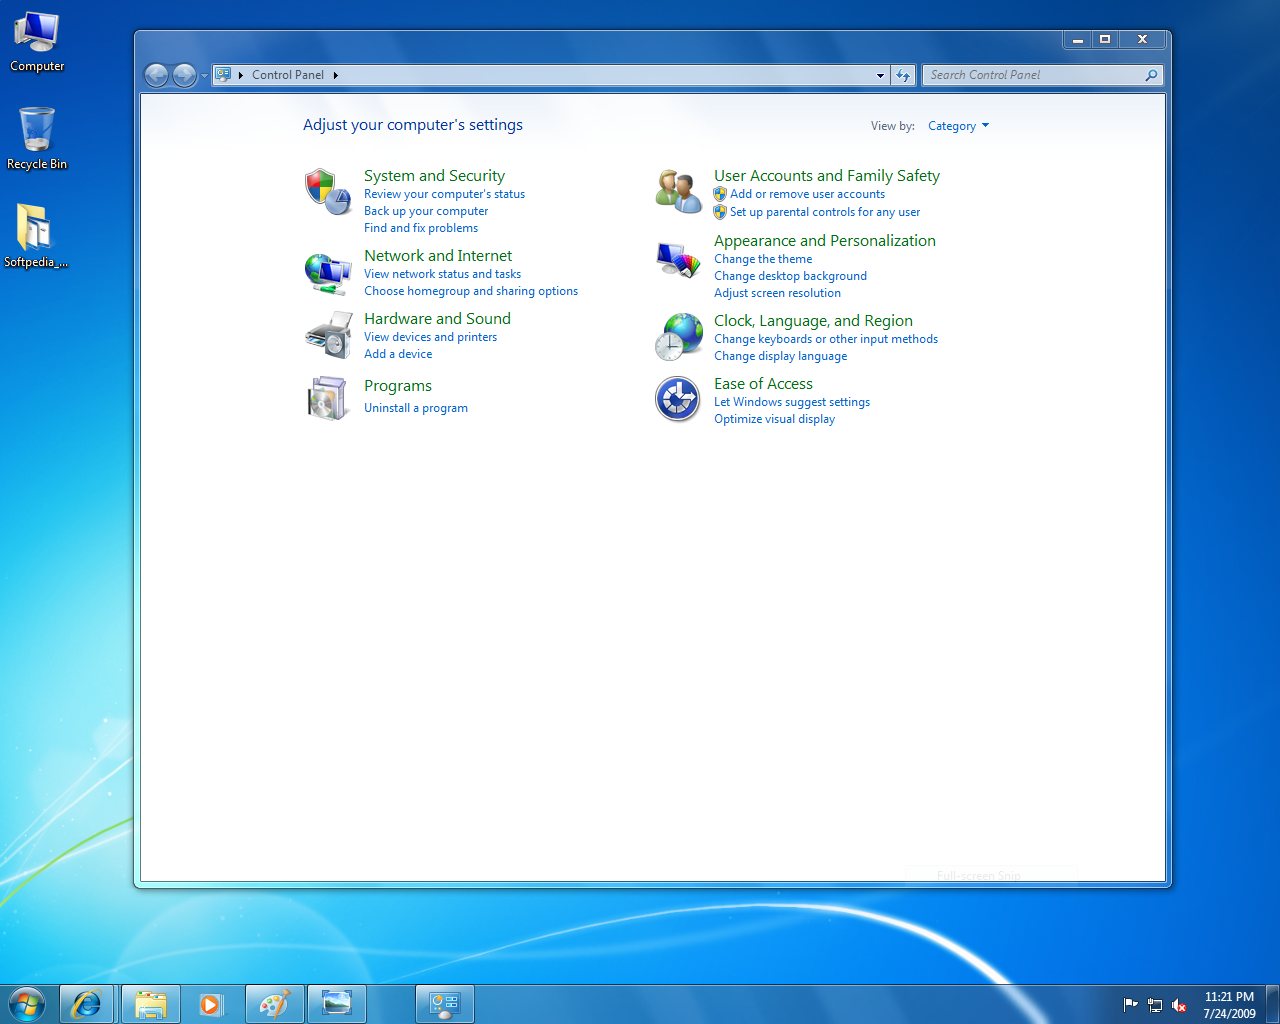 windows 7 update pack